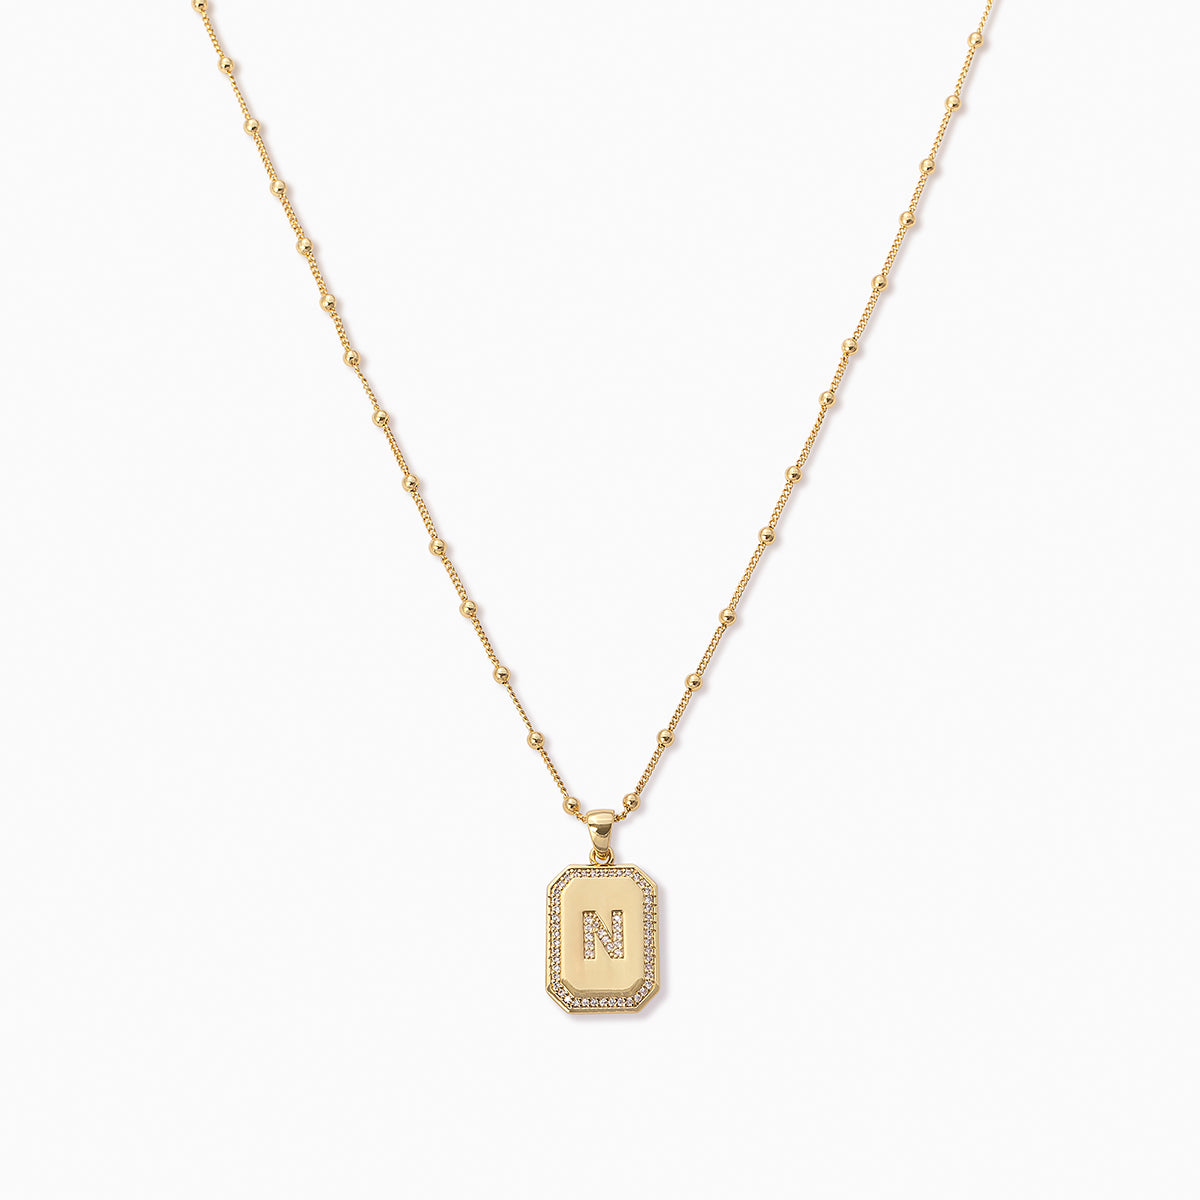 Sur 2.0 Necklace | Gold N | Product Image | Uncommon James